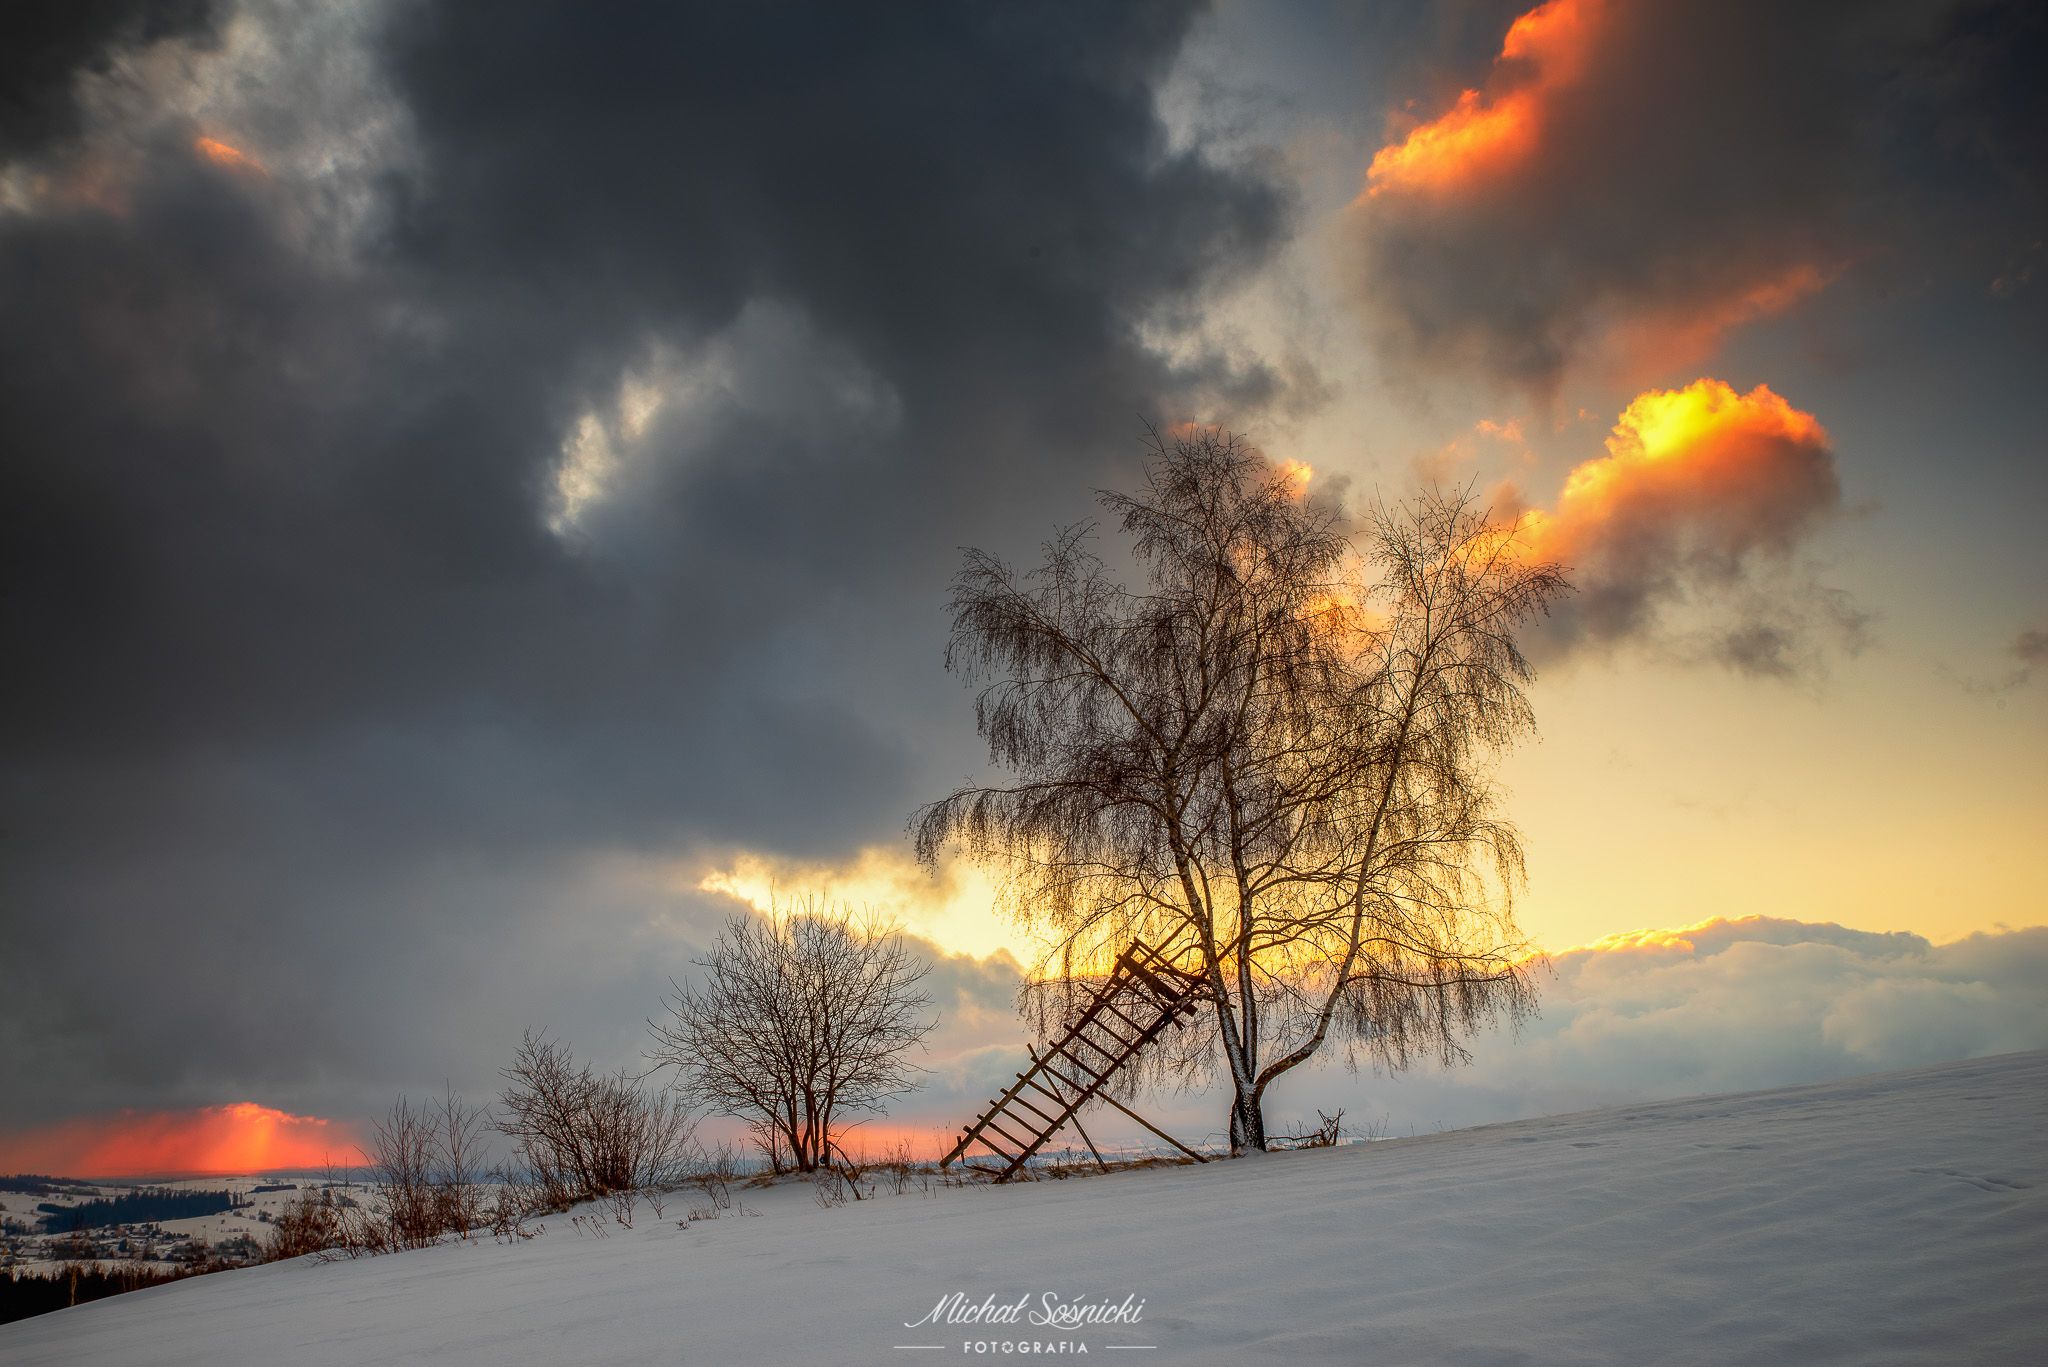 #poland #pentax #benro #lightroom #nikcollection #nature #sunrise #mountains #sky #fog #foggy #morning #pix #trees #sun #forest, Michał Sośnicki